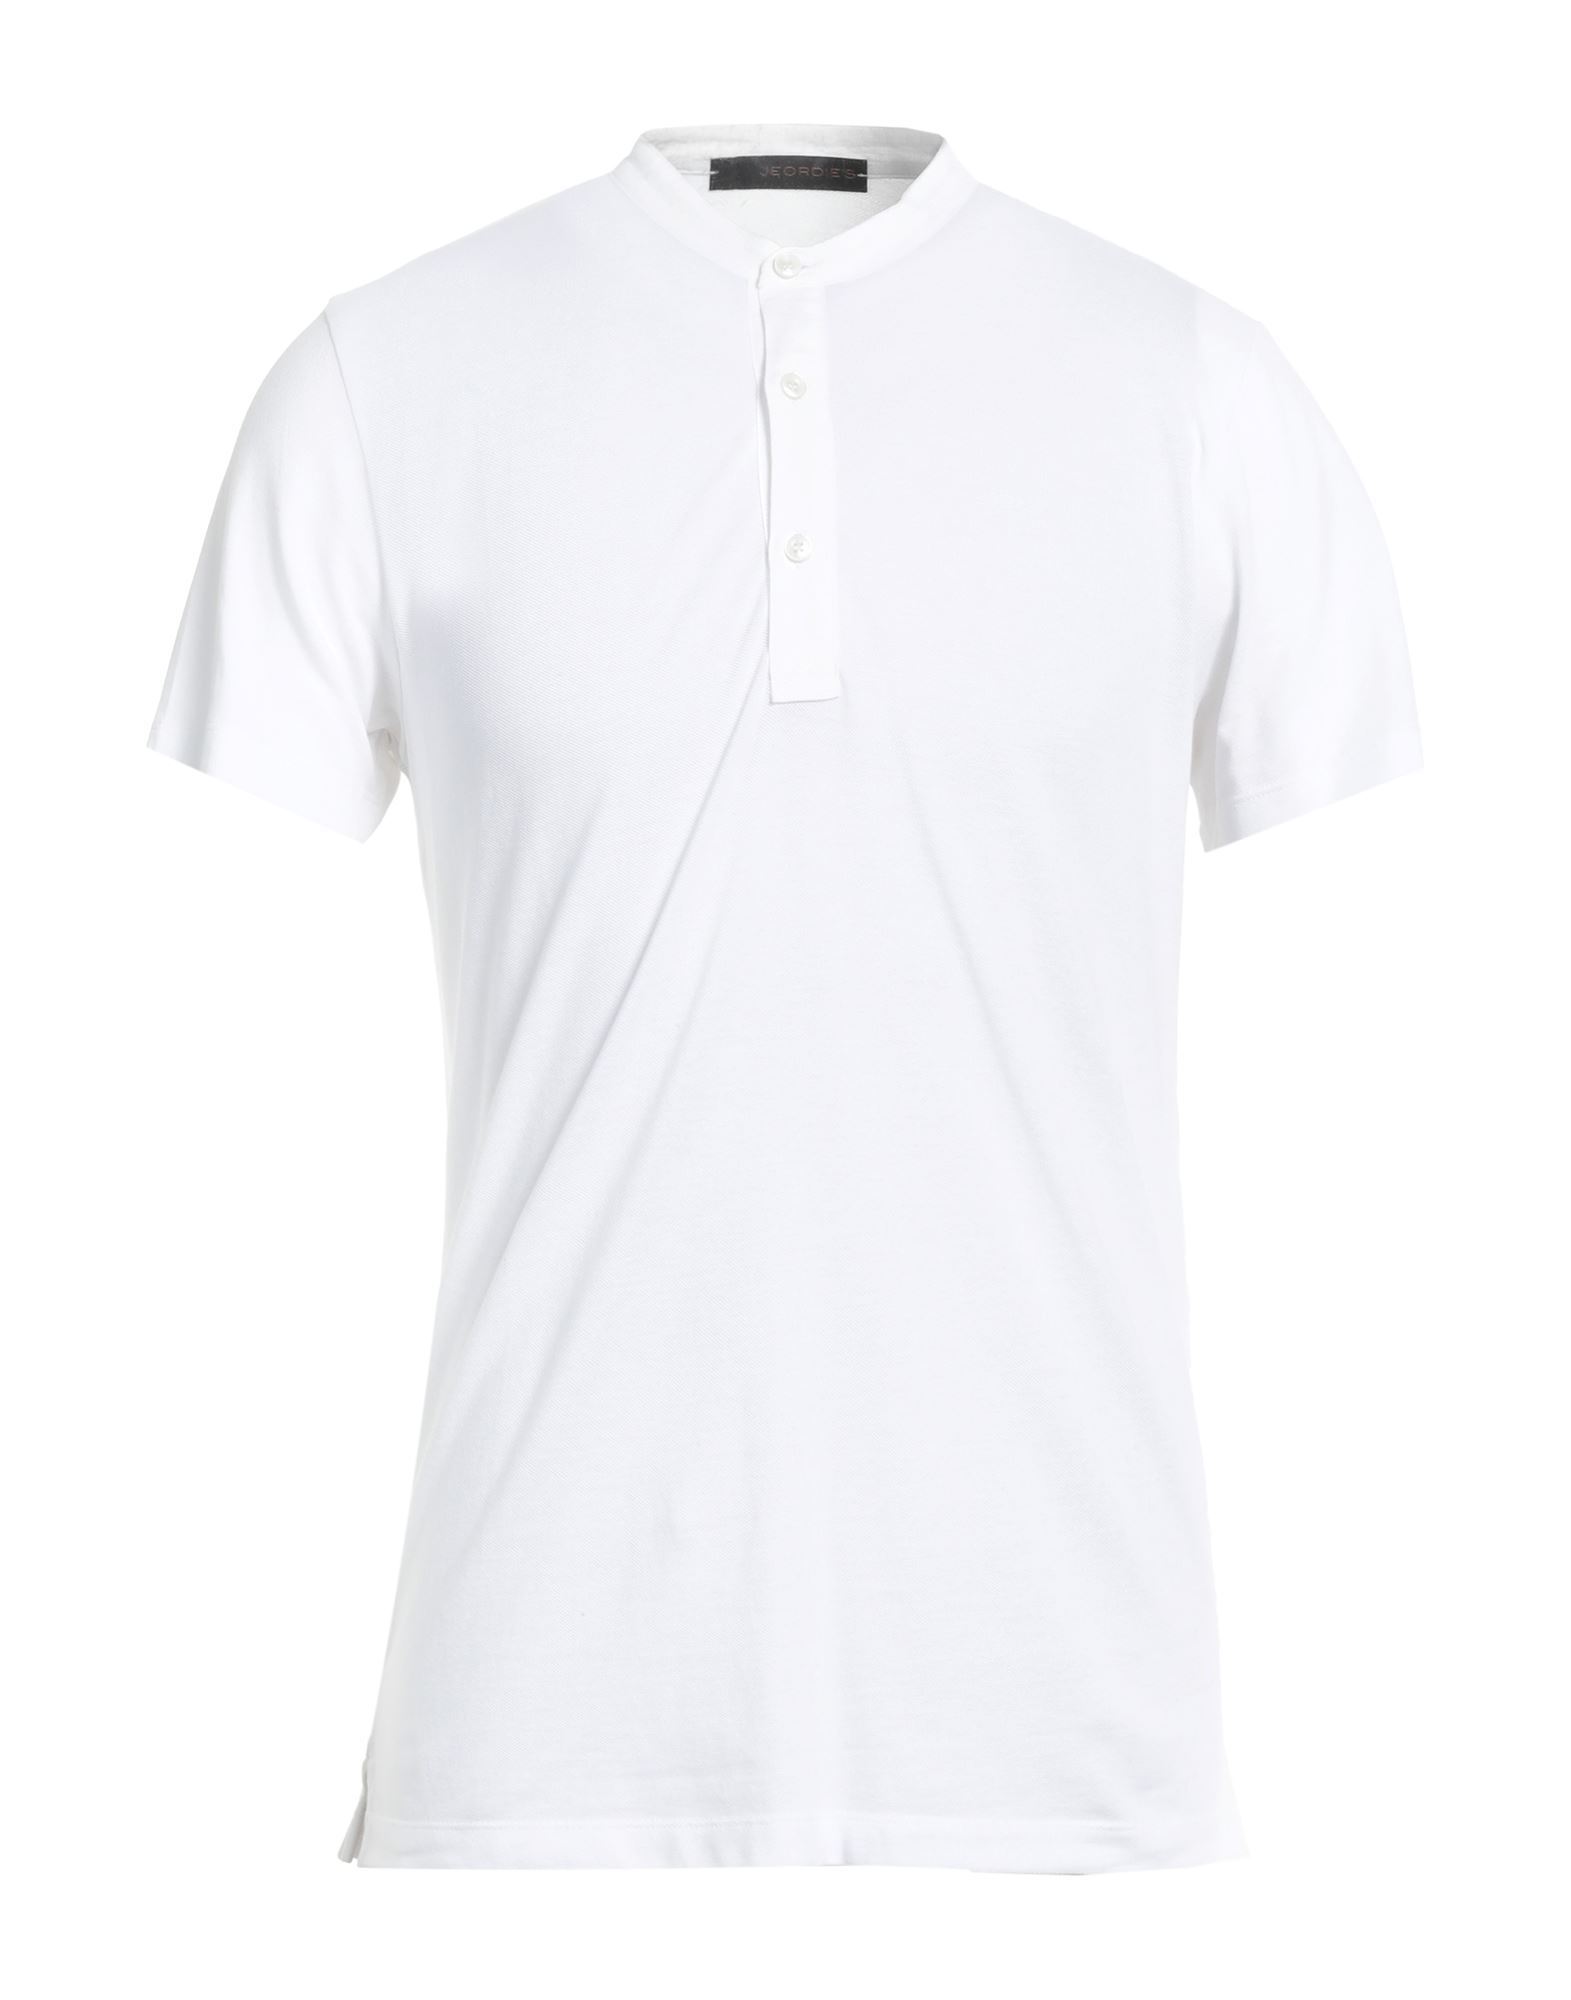 Jeordie's Man T-shirt White Size 3xl Cotton, Elastane